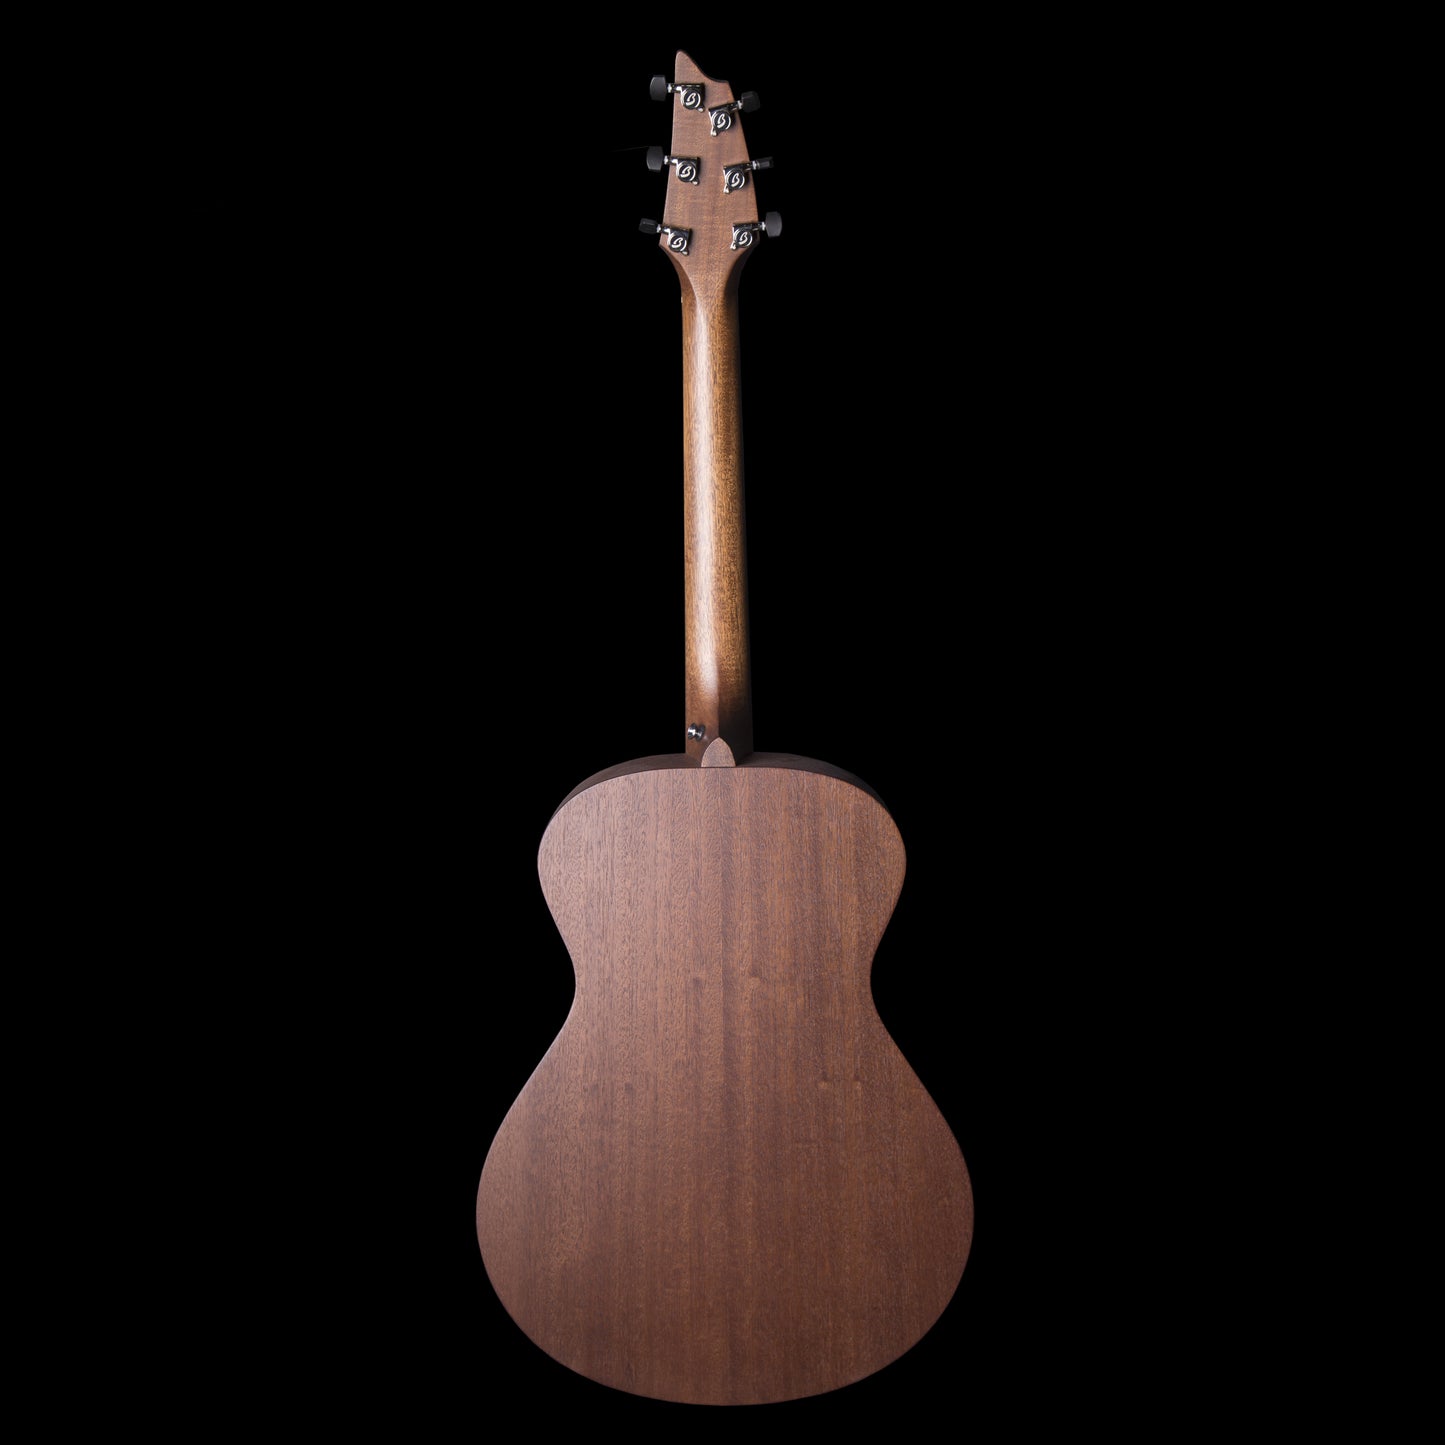 Breedlove USA Series Concert Moon Light E Acoustic Guitar w/ Case (USCN05ESSMA)